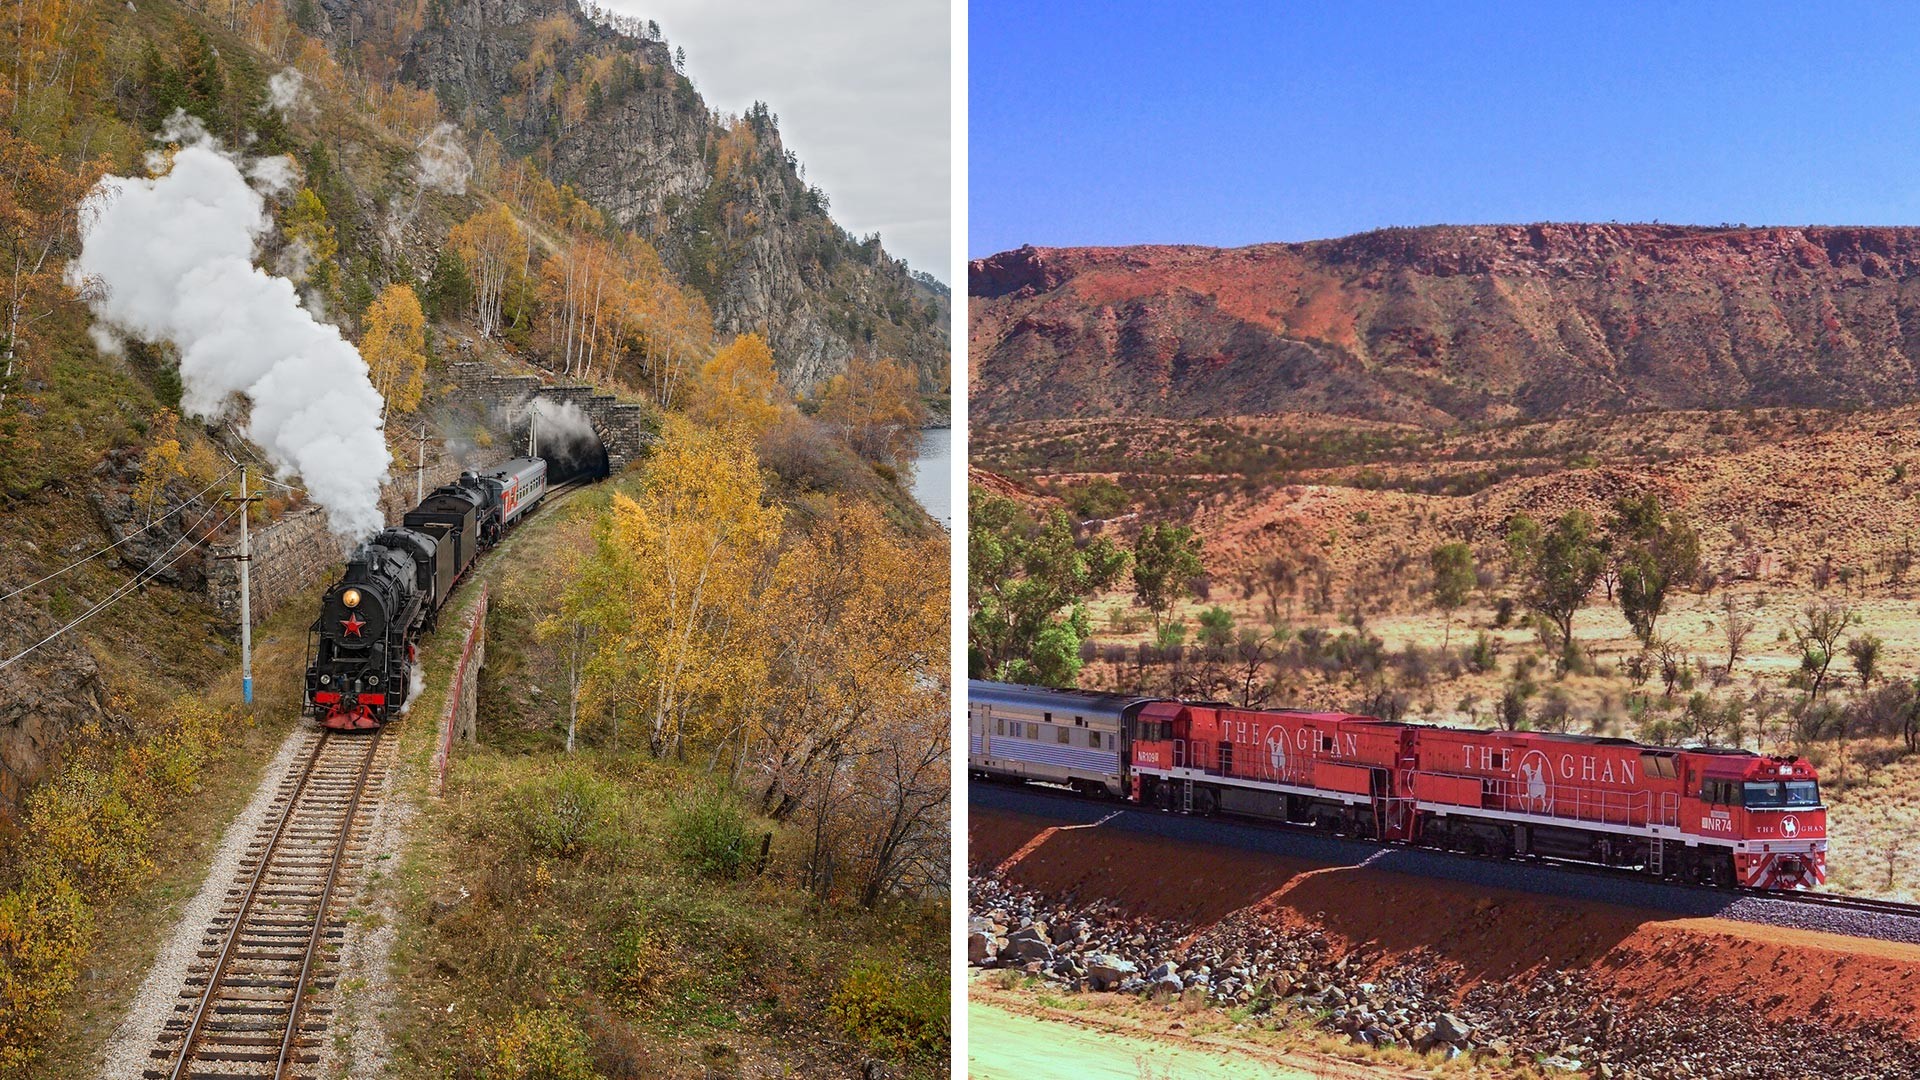 Left: The Circum-Baikal Railway. Right: The Ghan passenger train.
